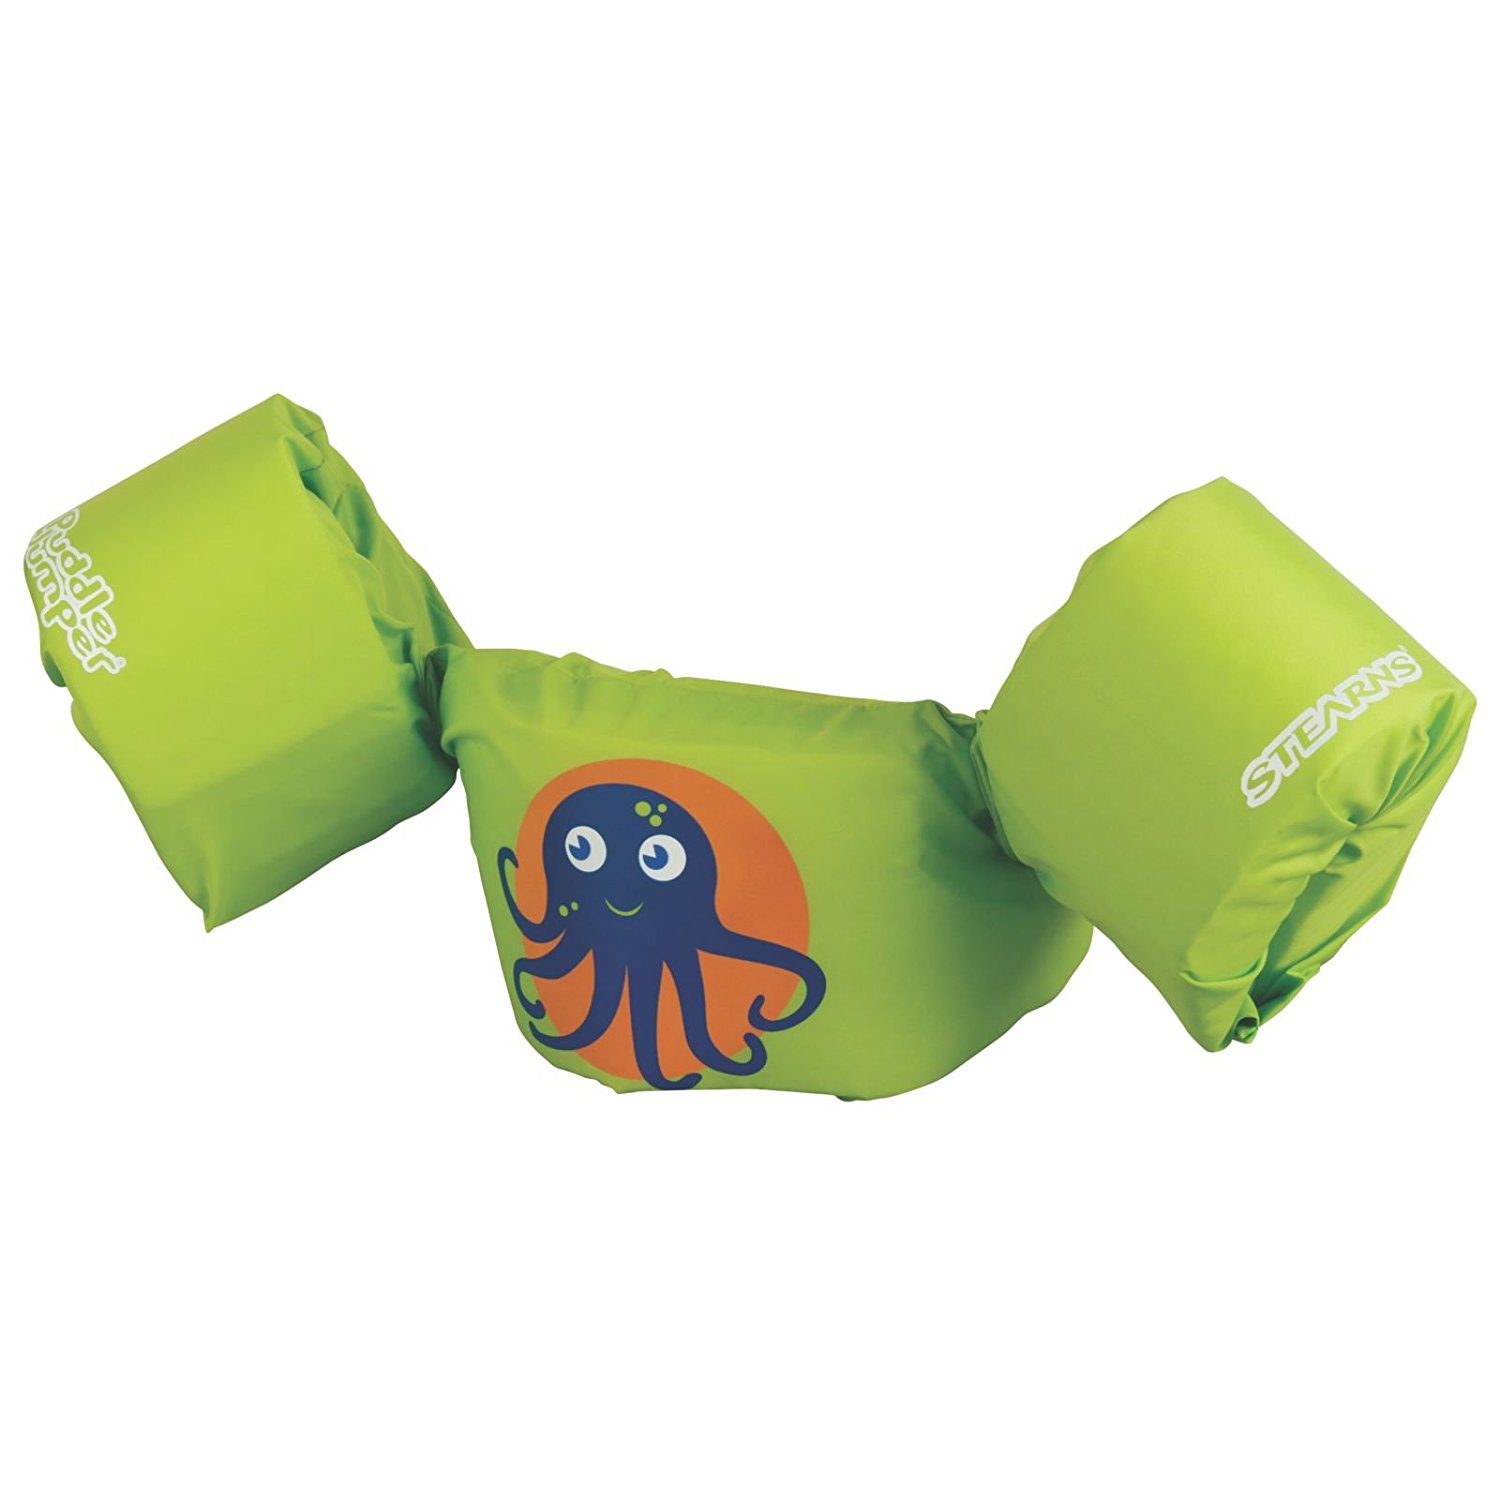 Amazon.com : Stearns Puddle Jumper Child Life Jacket, Blue Crab ...